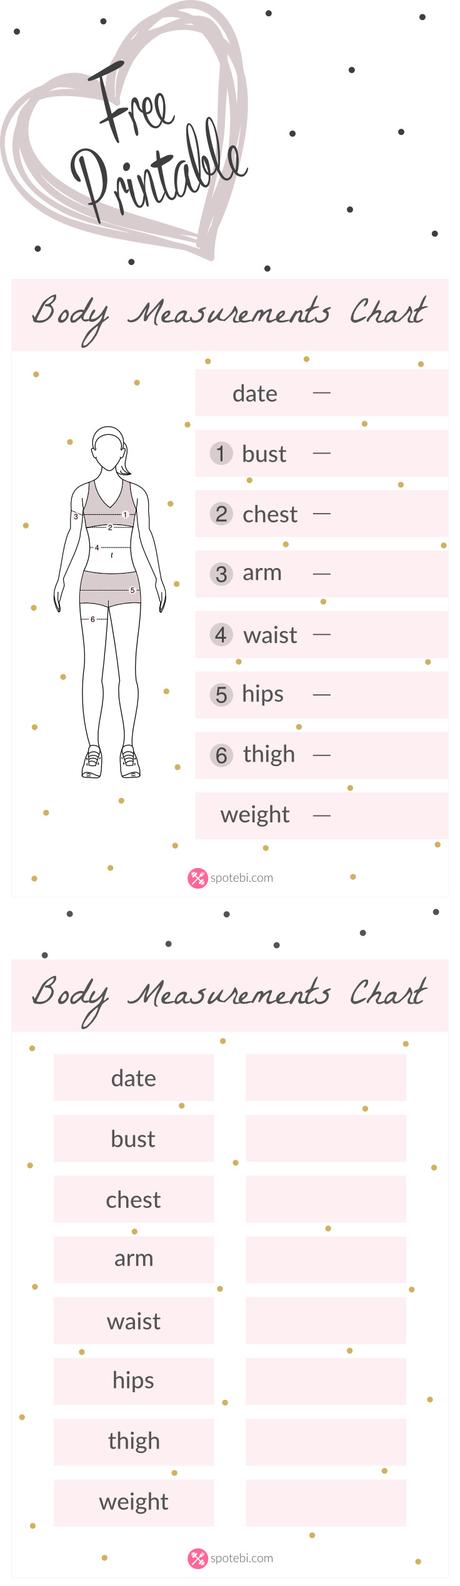 body-measurement-chart